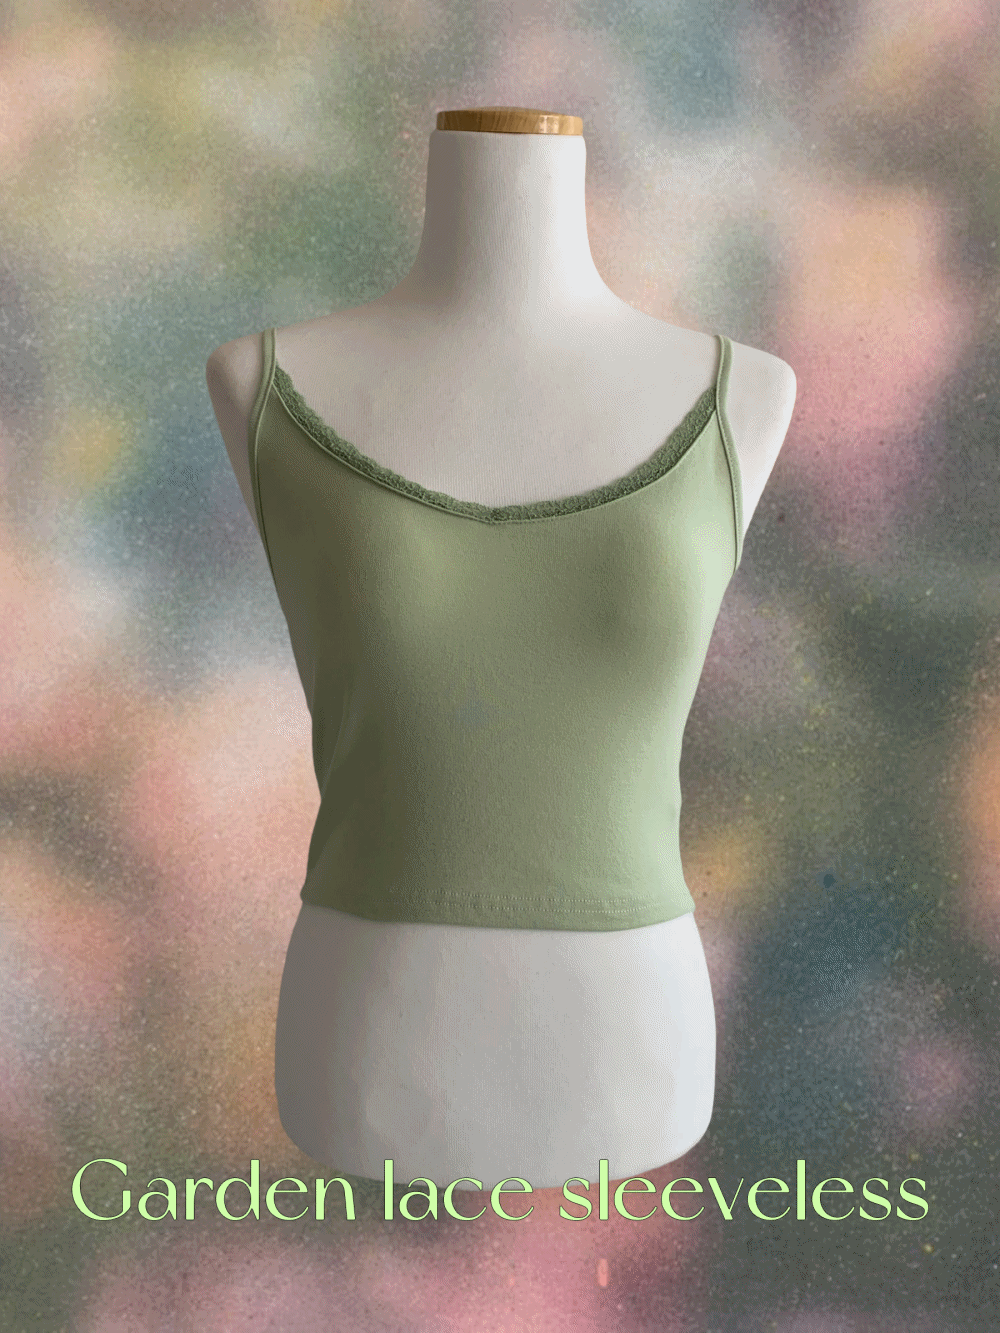 [Dress] Garden lace sleeveless / 5 colors